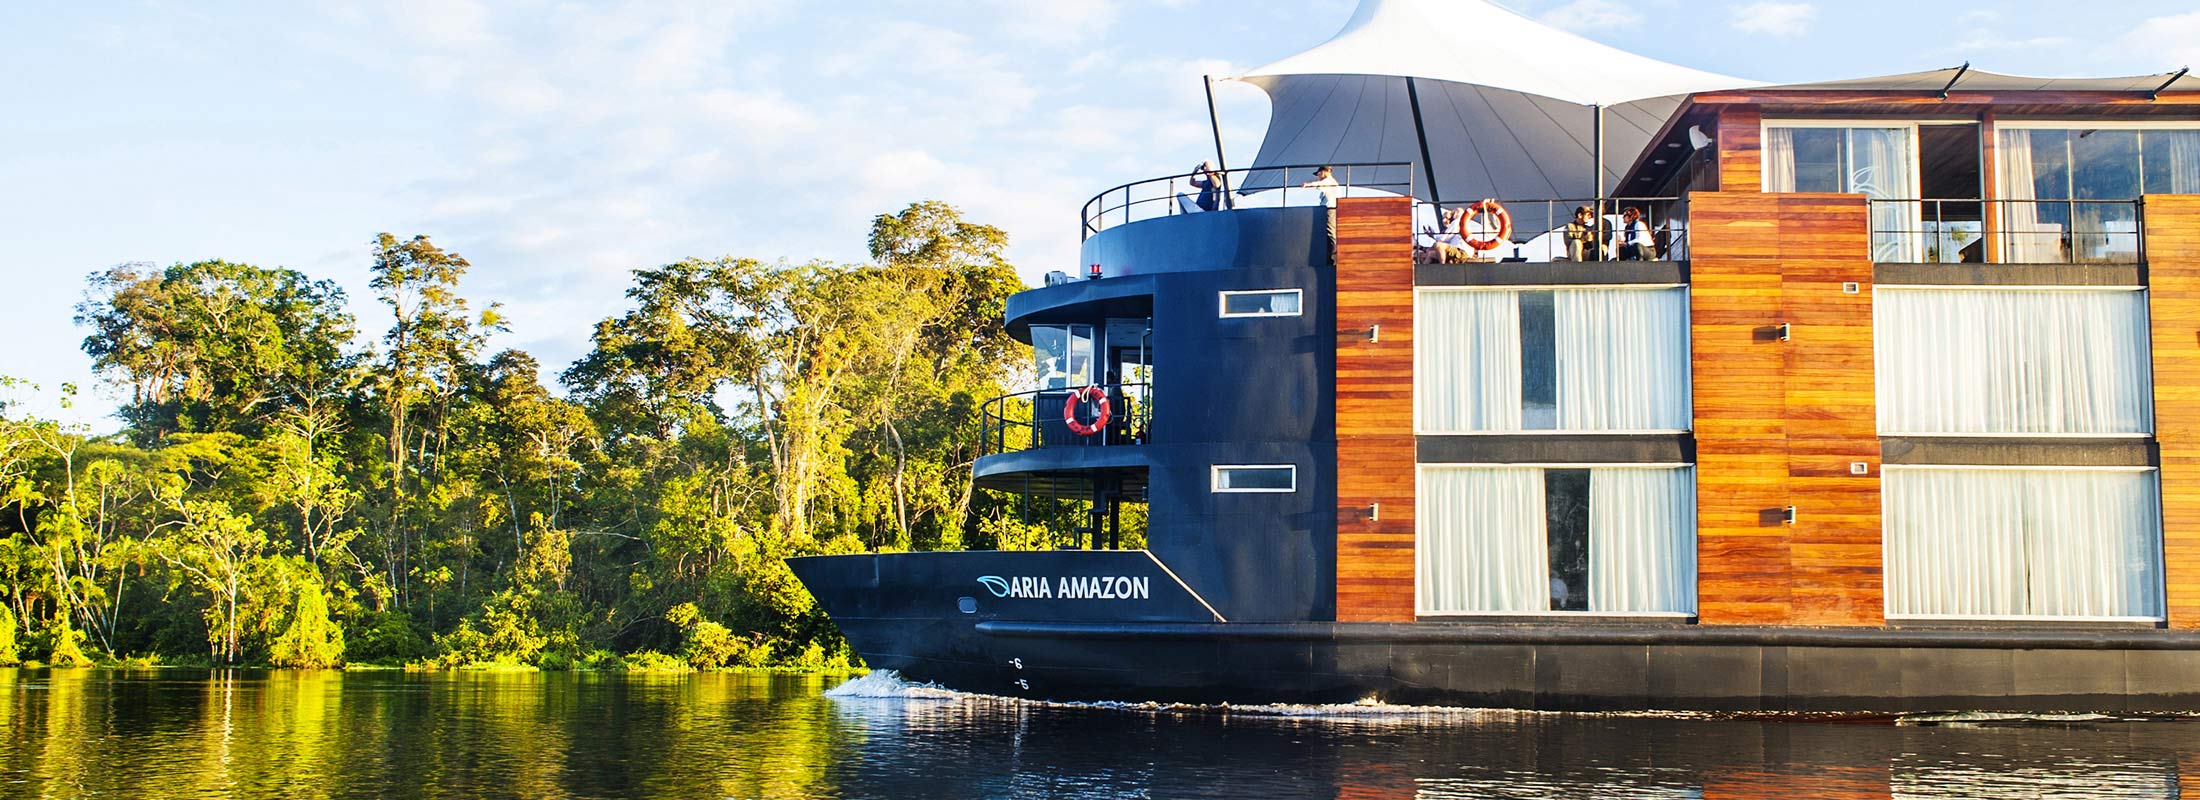 Aria-Amazon-Motor-Yacht-for-Charter-River-Cruises-Amazon-slider-2.jpg